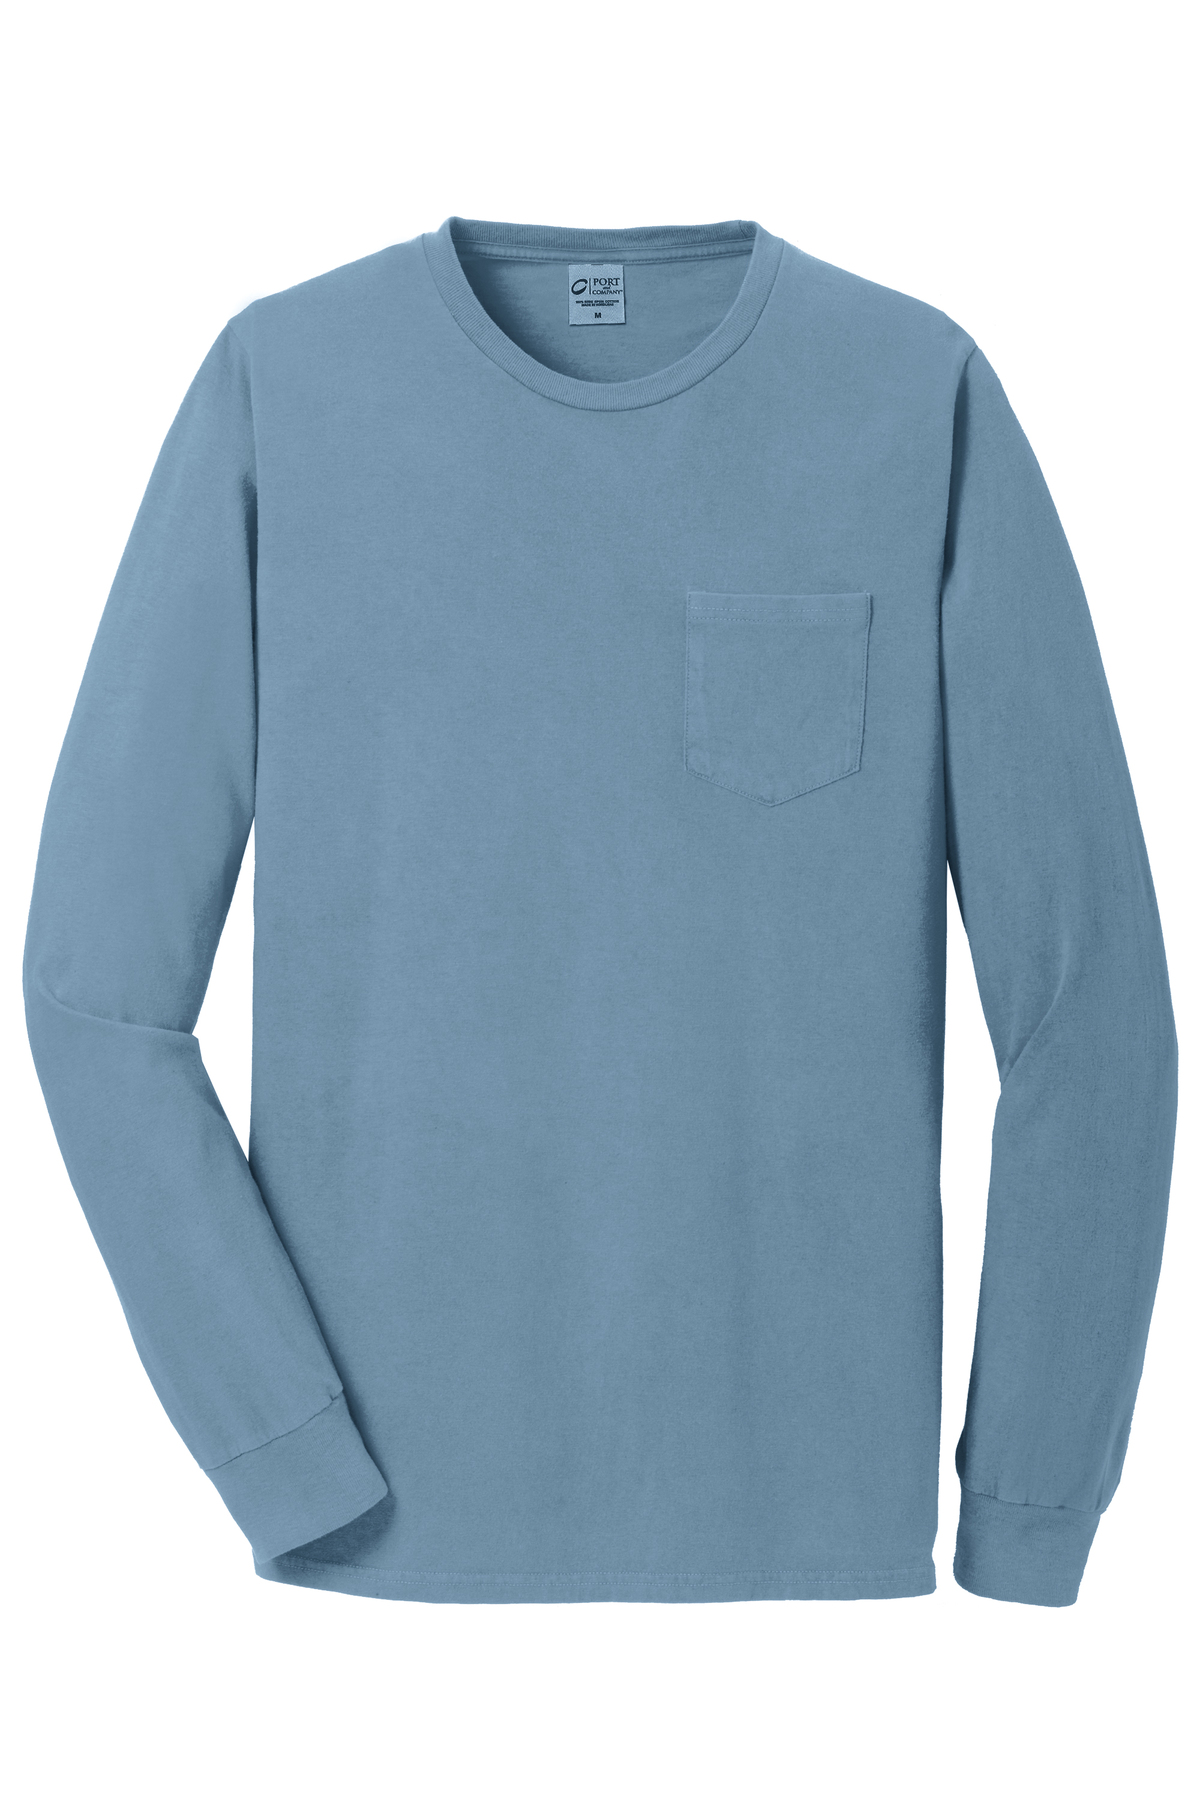 Port & Company Beach Wash Garment-Dyed Long Sleeve Pocket Tee | Product ...